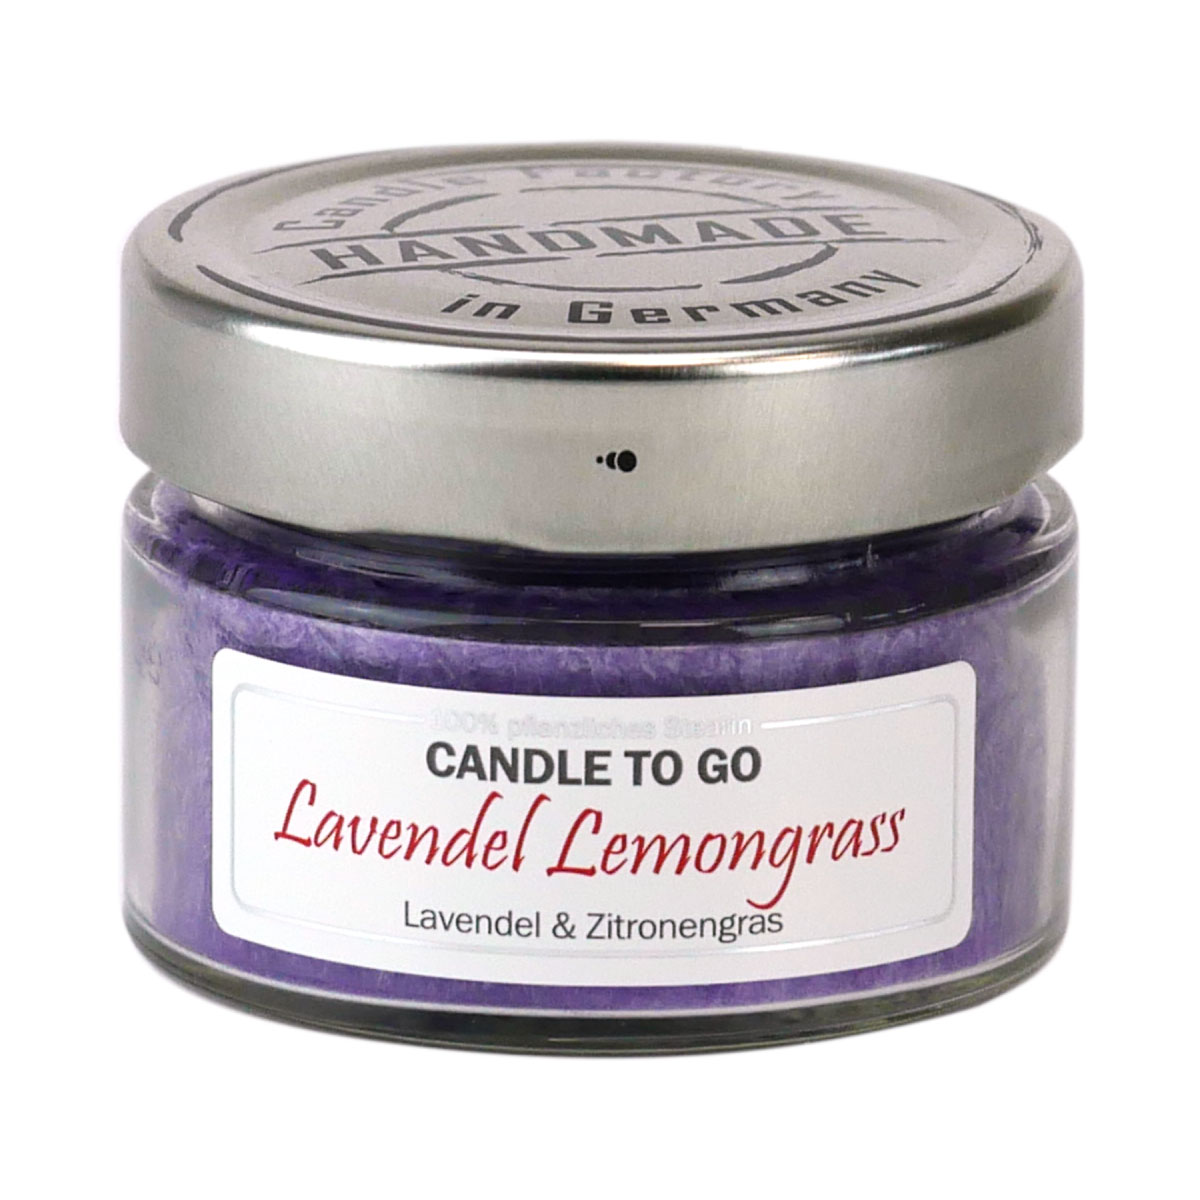 Lavendel Lemongrass - Candle to Go Duftkerze von Candle Factory